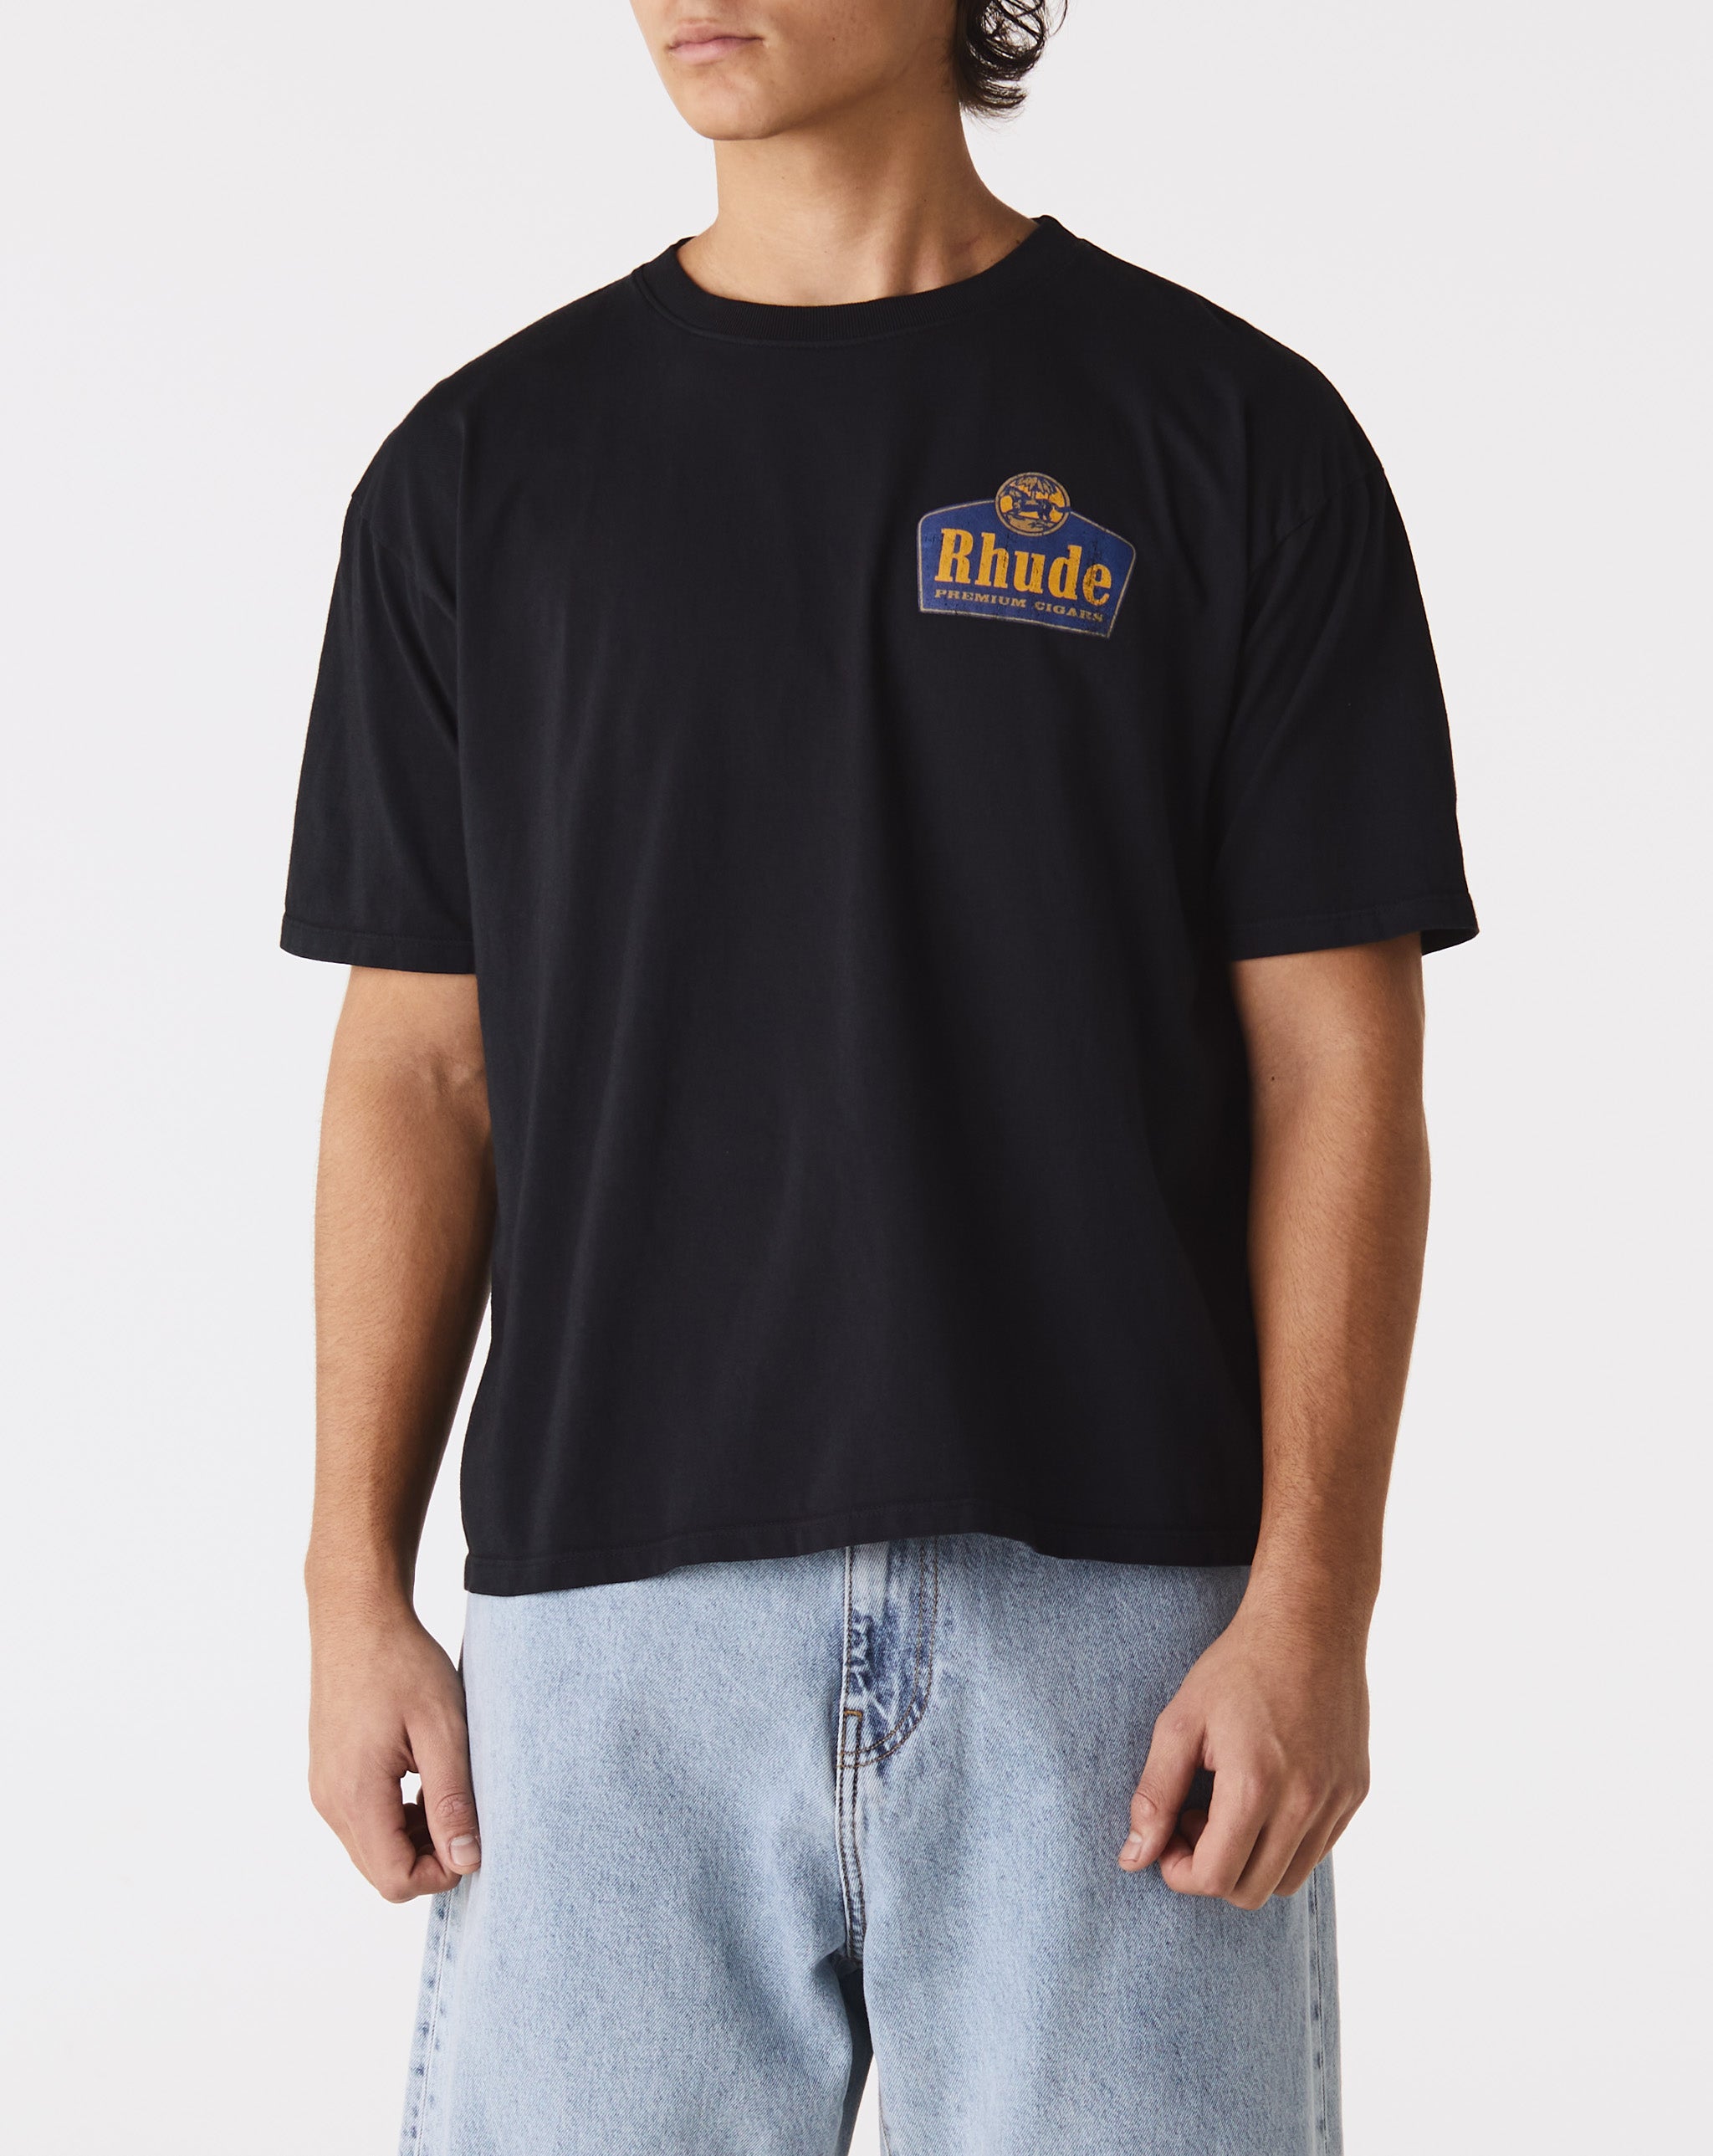 Rhude Grand Cru T-Shirt  - XHIBITION